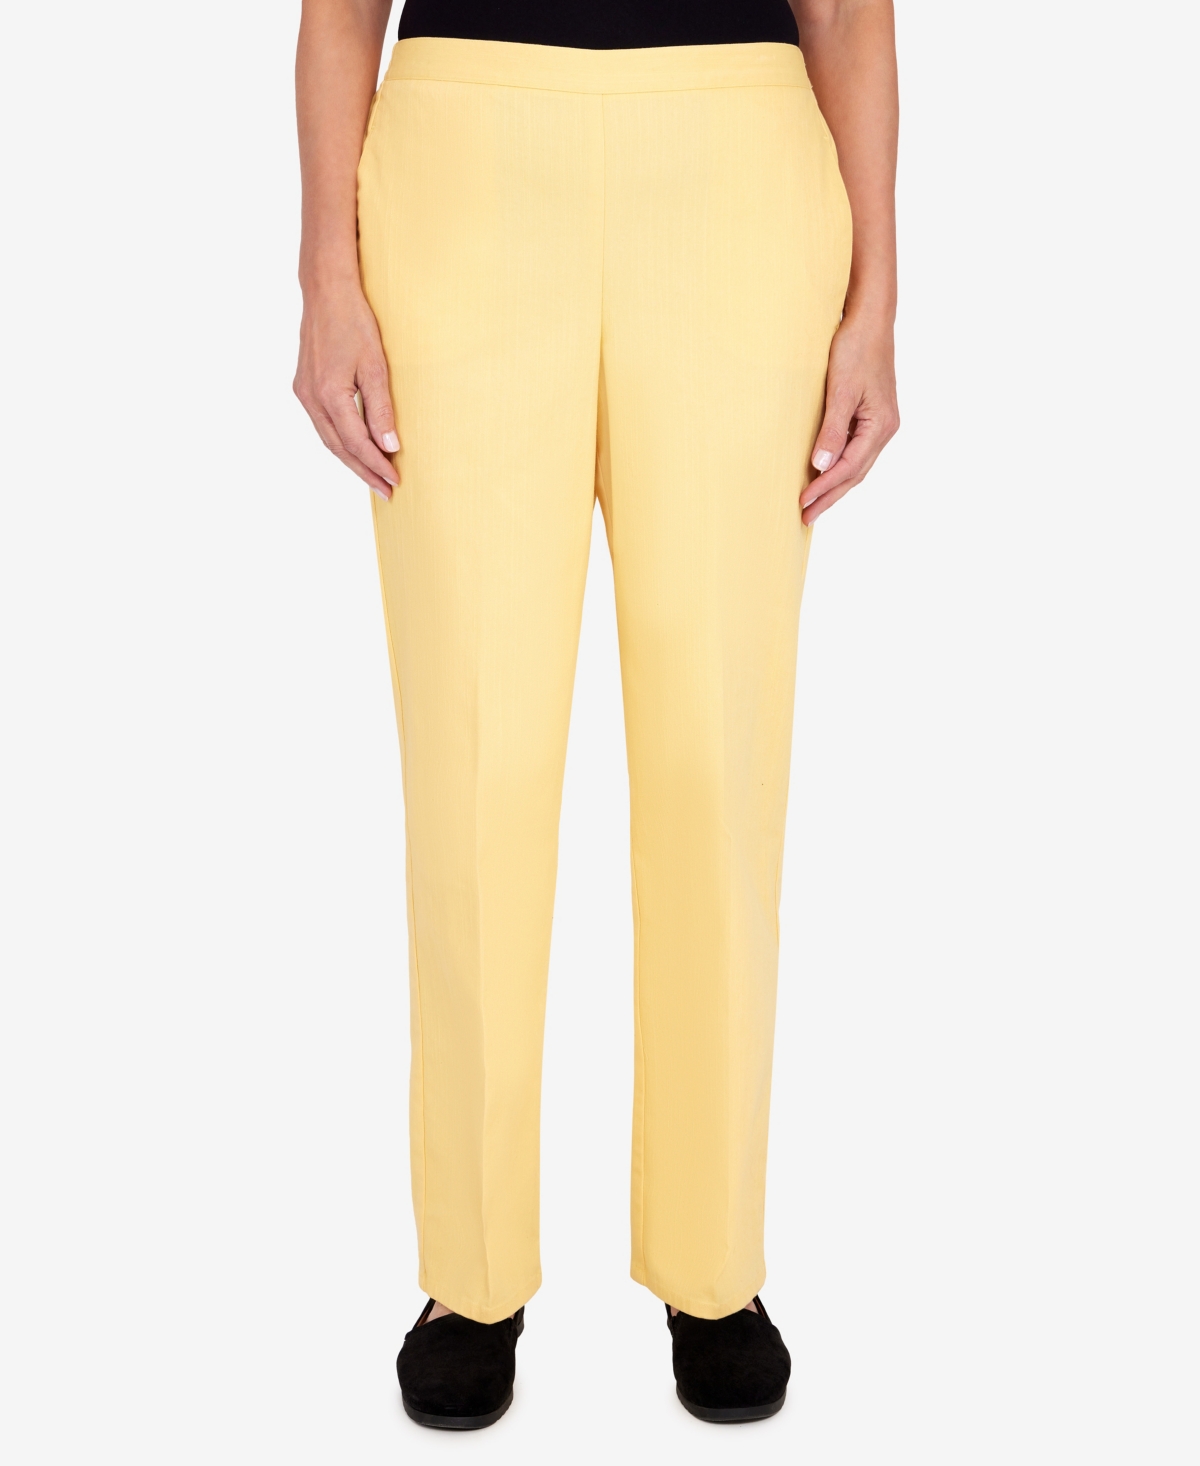  Alfred Dunner Women's Bright Idea Sunshine Medium Length Pants